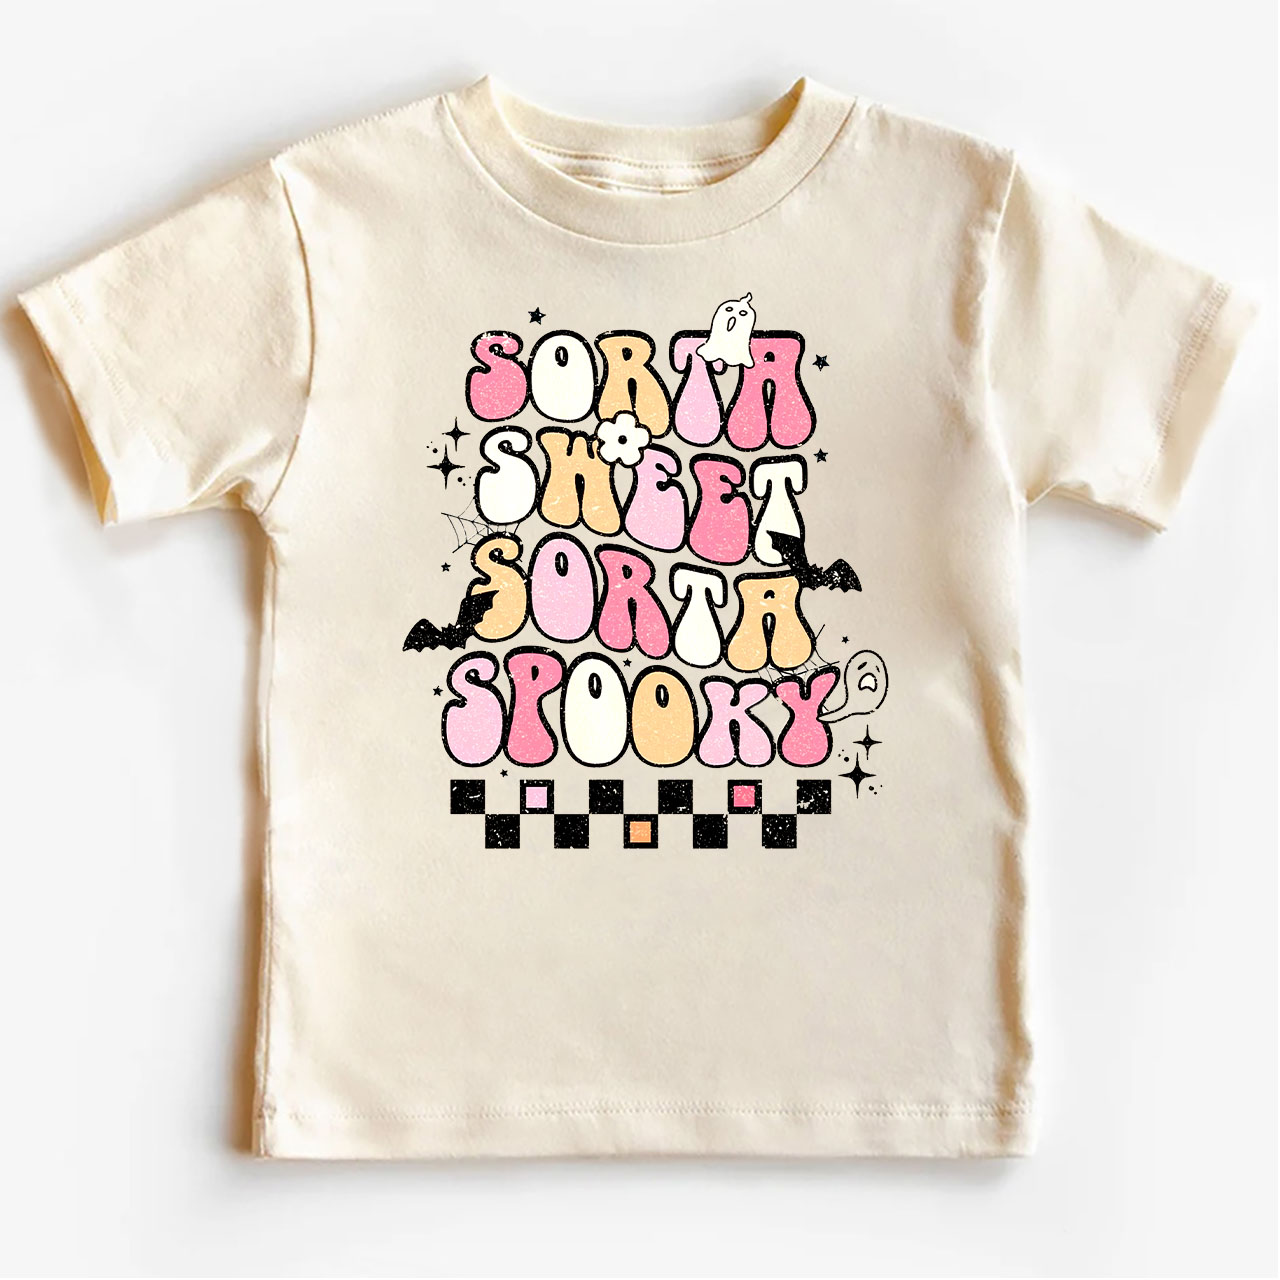 Sorta Sweet Sorta Spooky Toddler Shirt